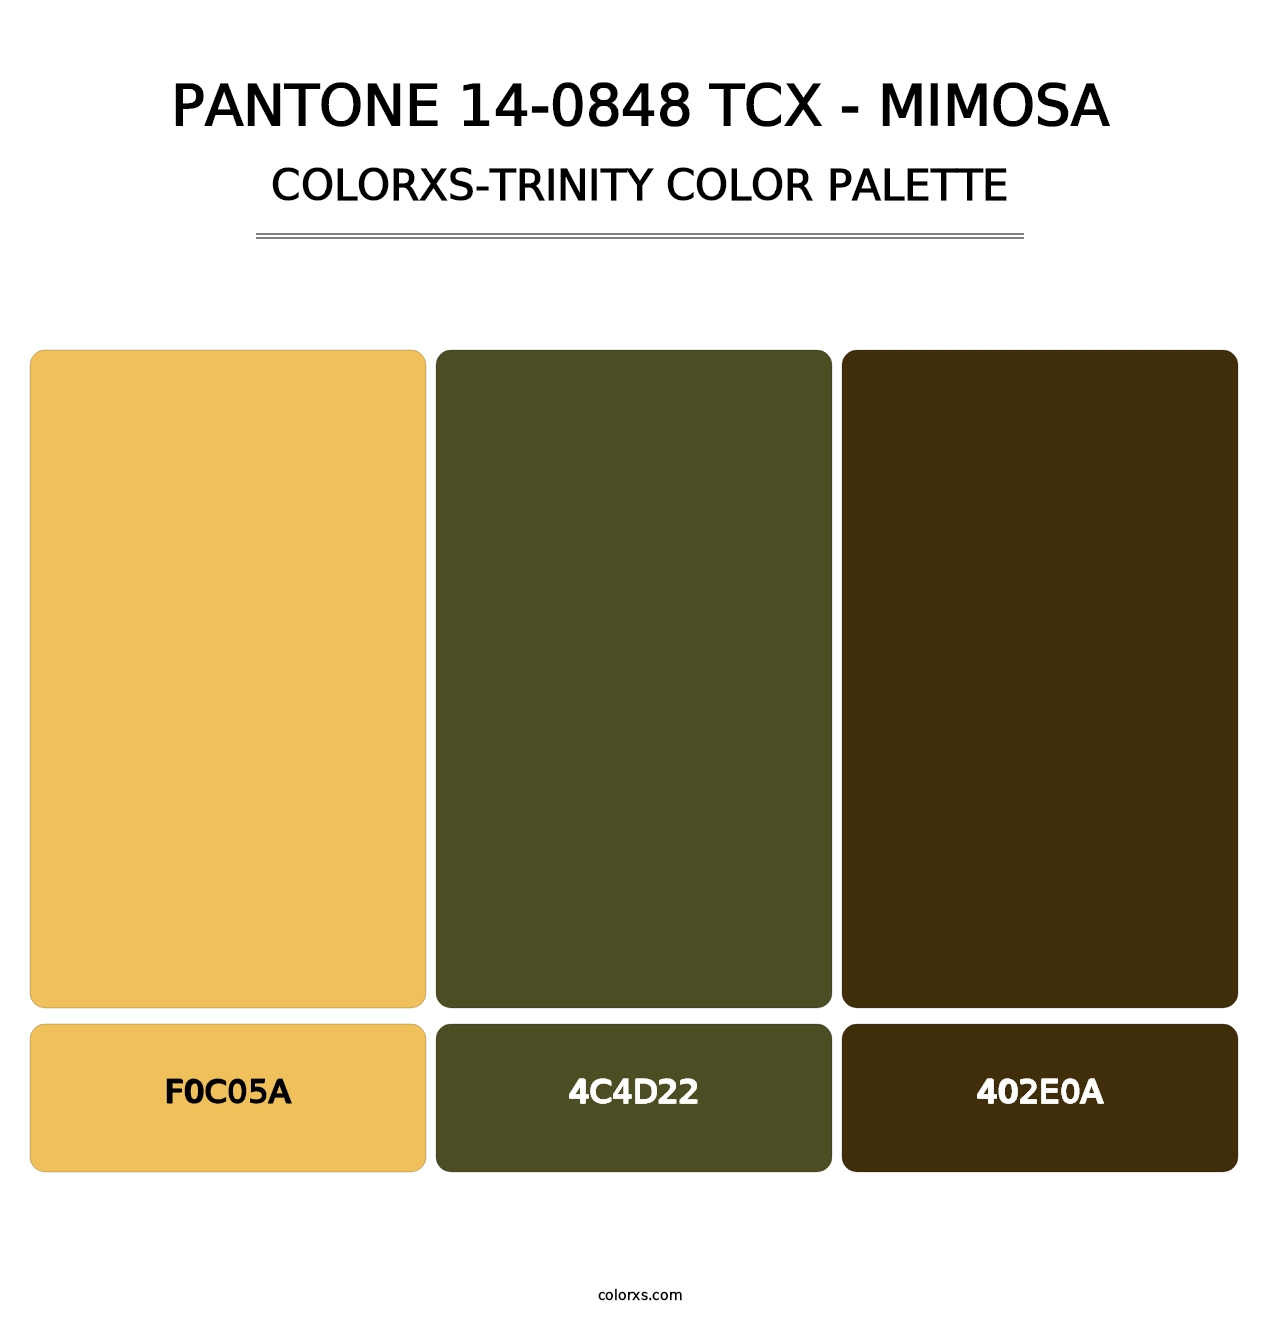 PANTONE 14-0848 TCX - Mimosa - Colorxs Trinity Palette